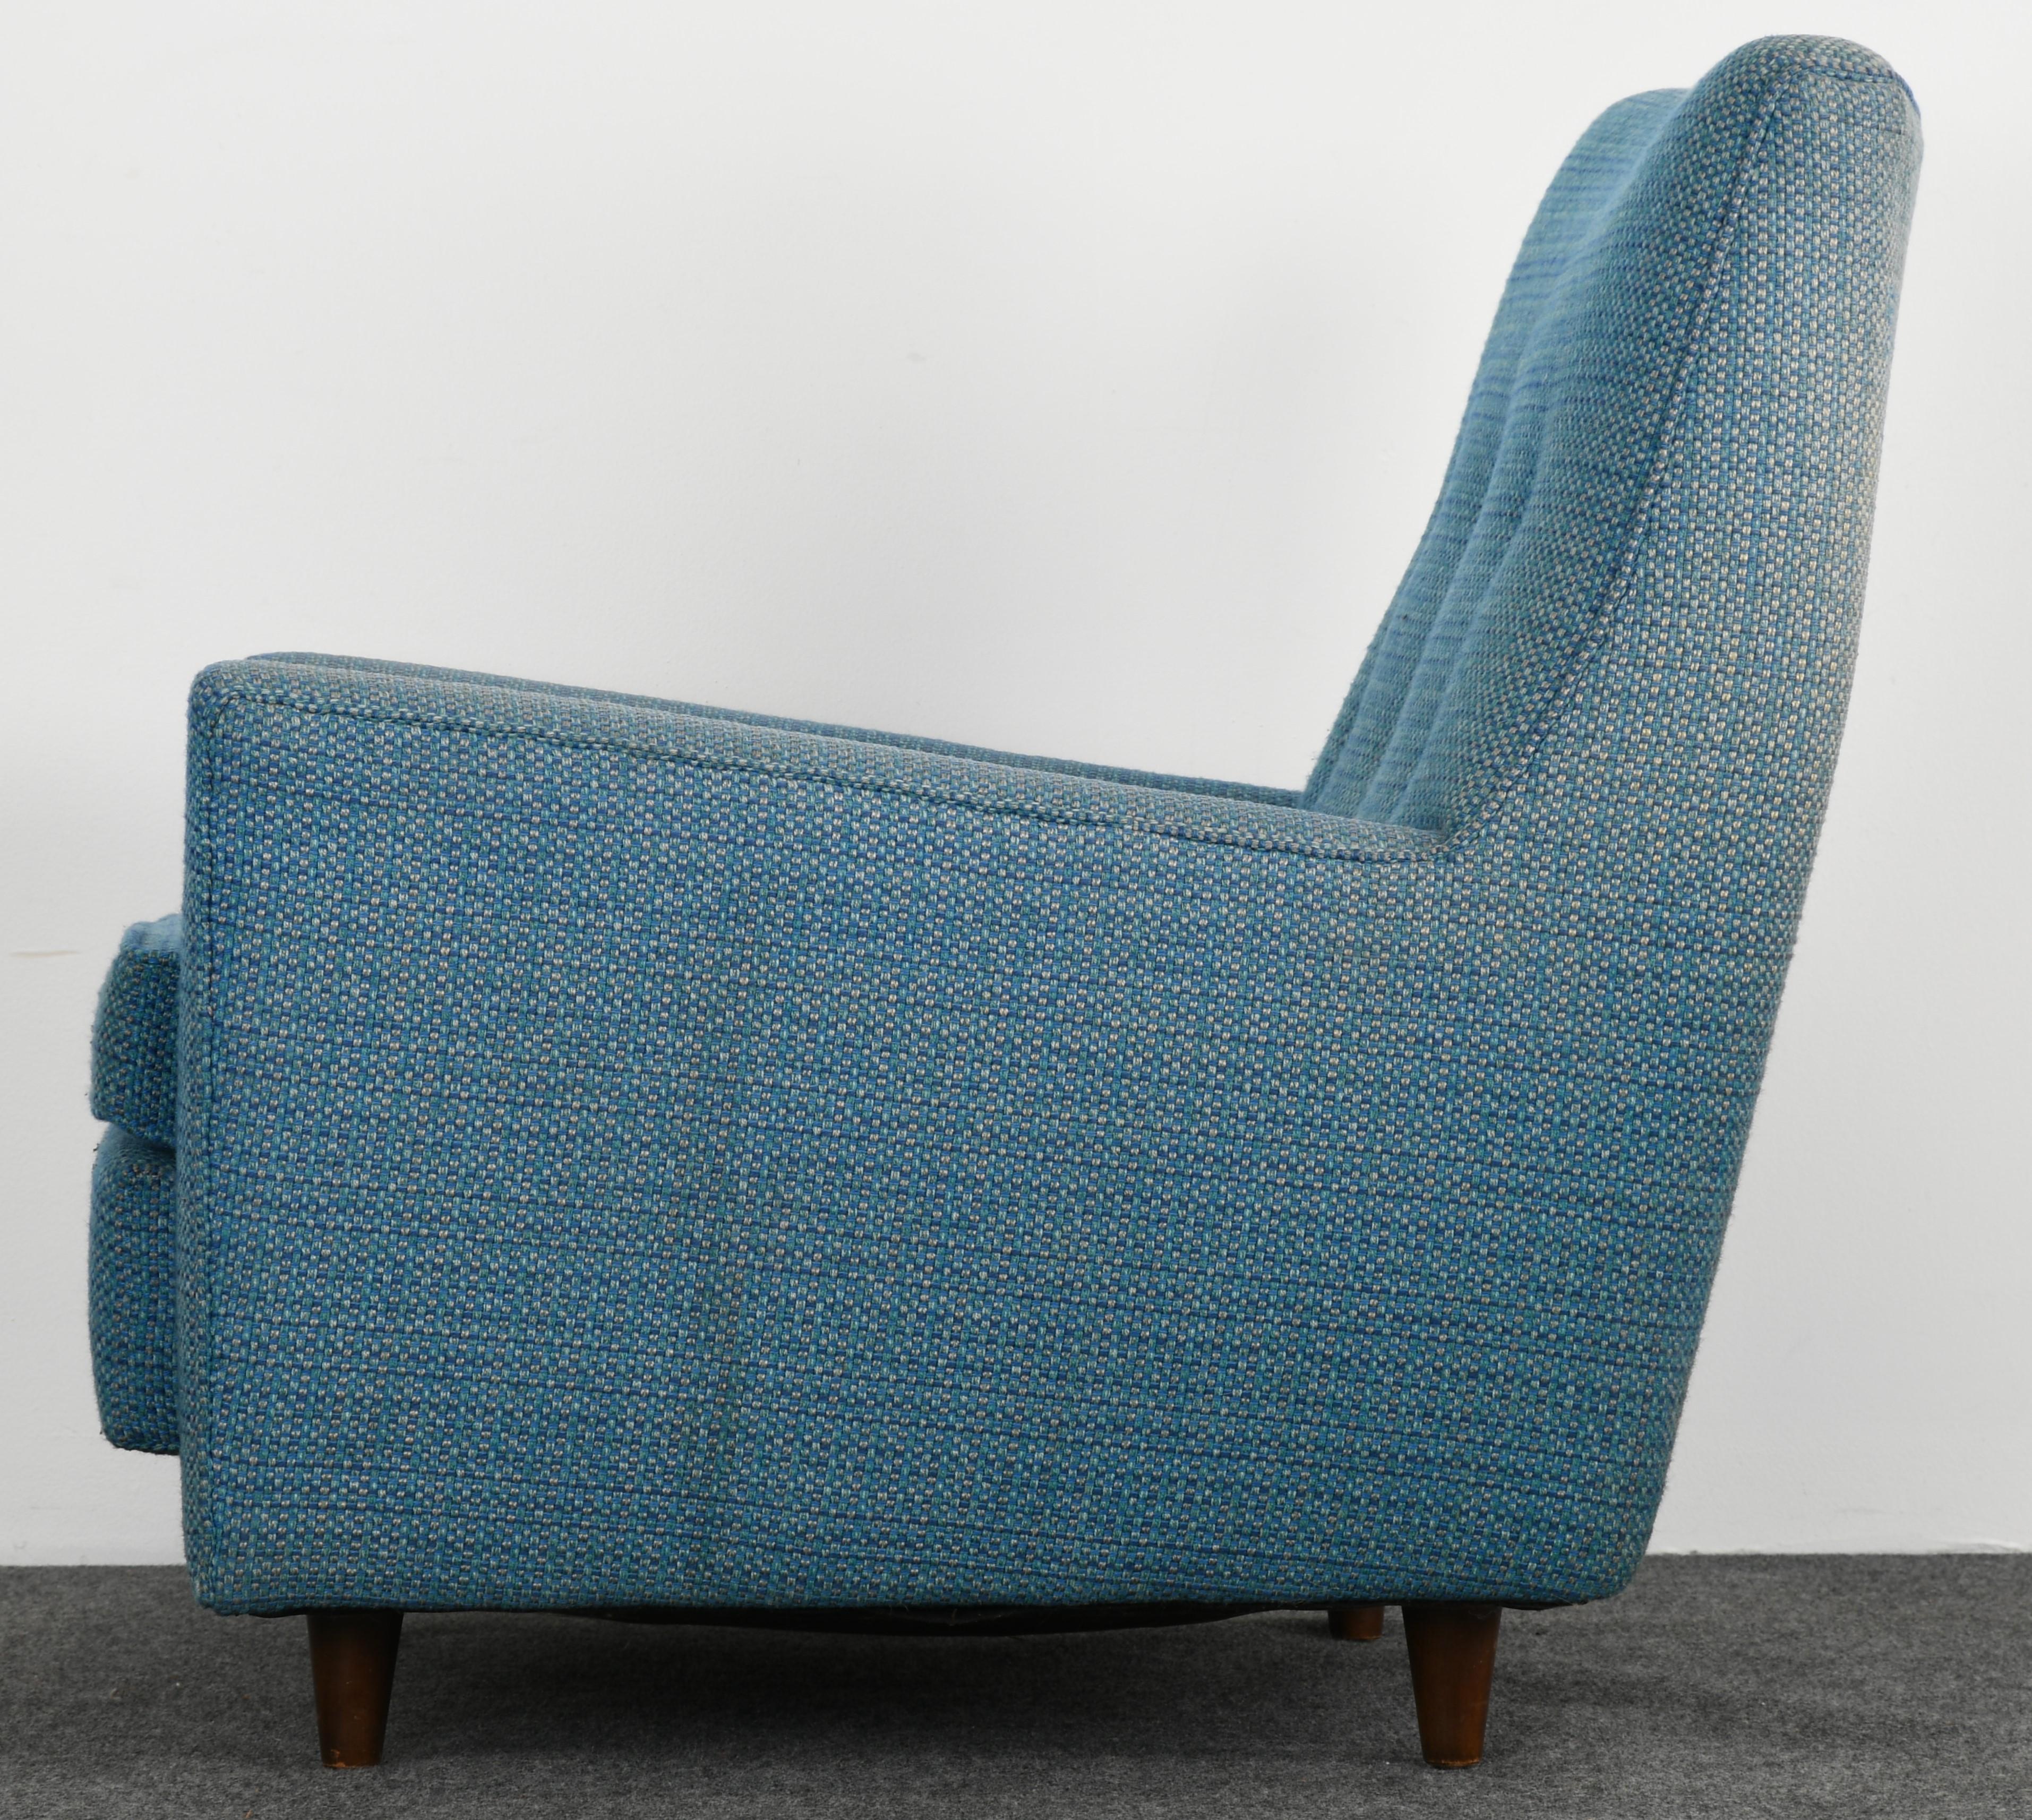 Upholstery Jens Risom Easy Chair and Ottoman Model U333 and U790, 1959